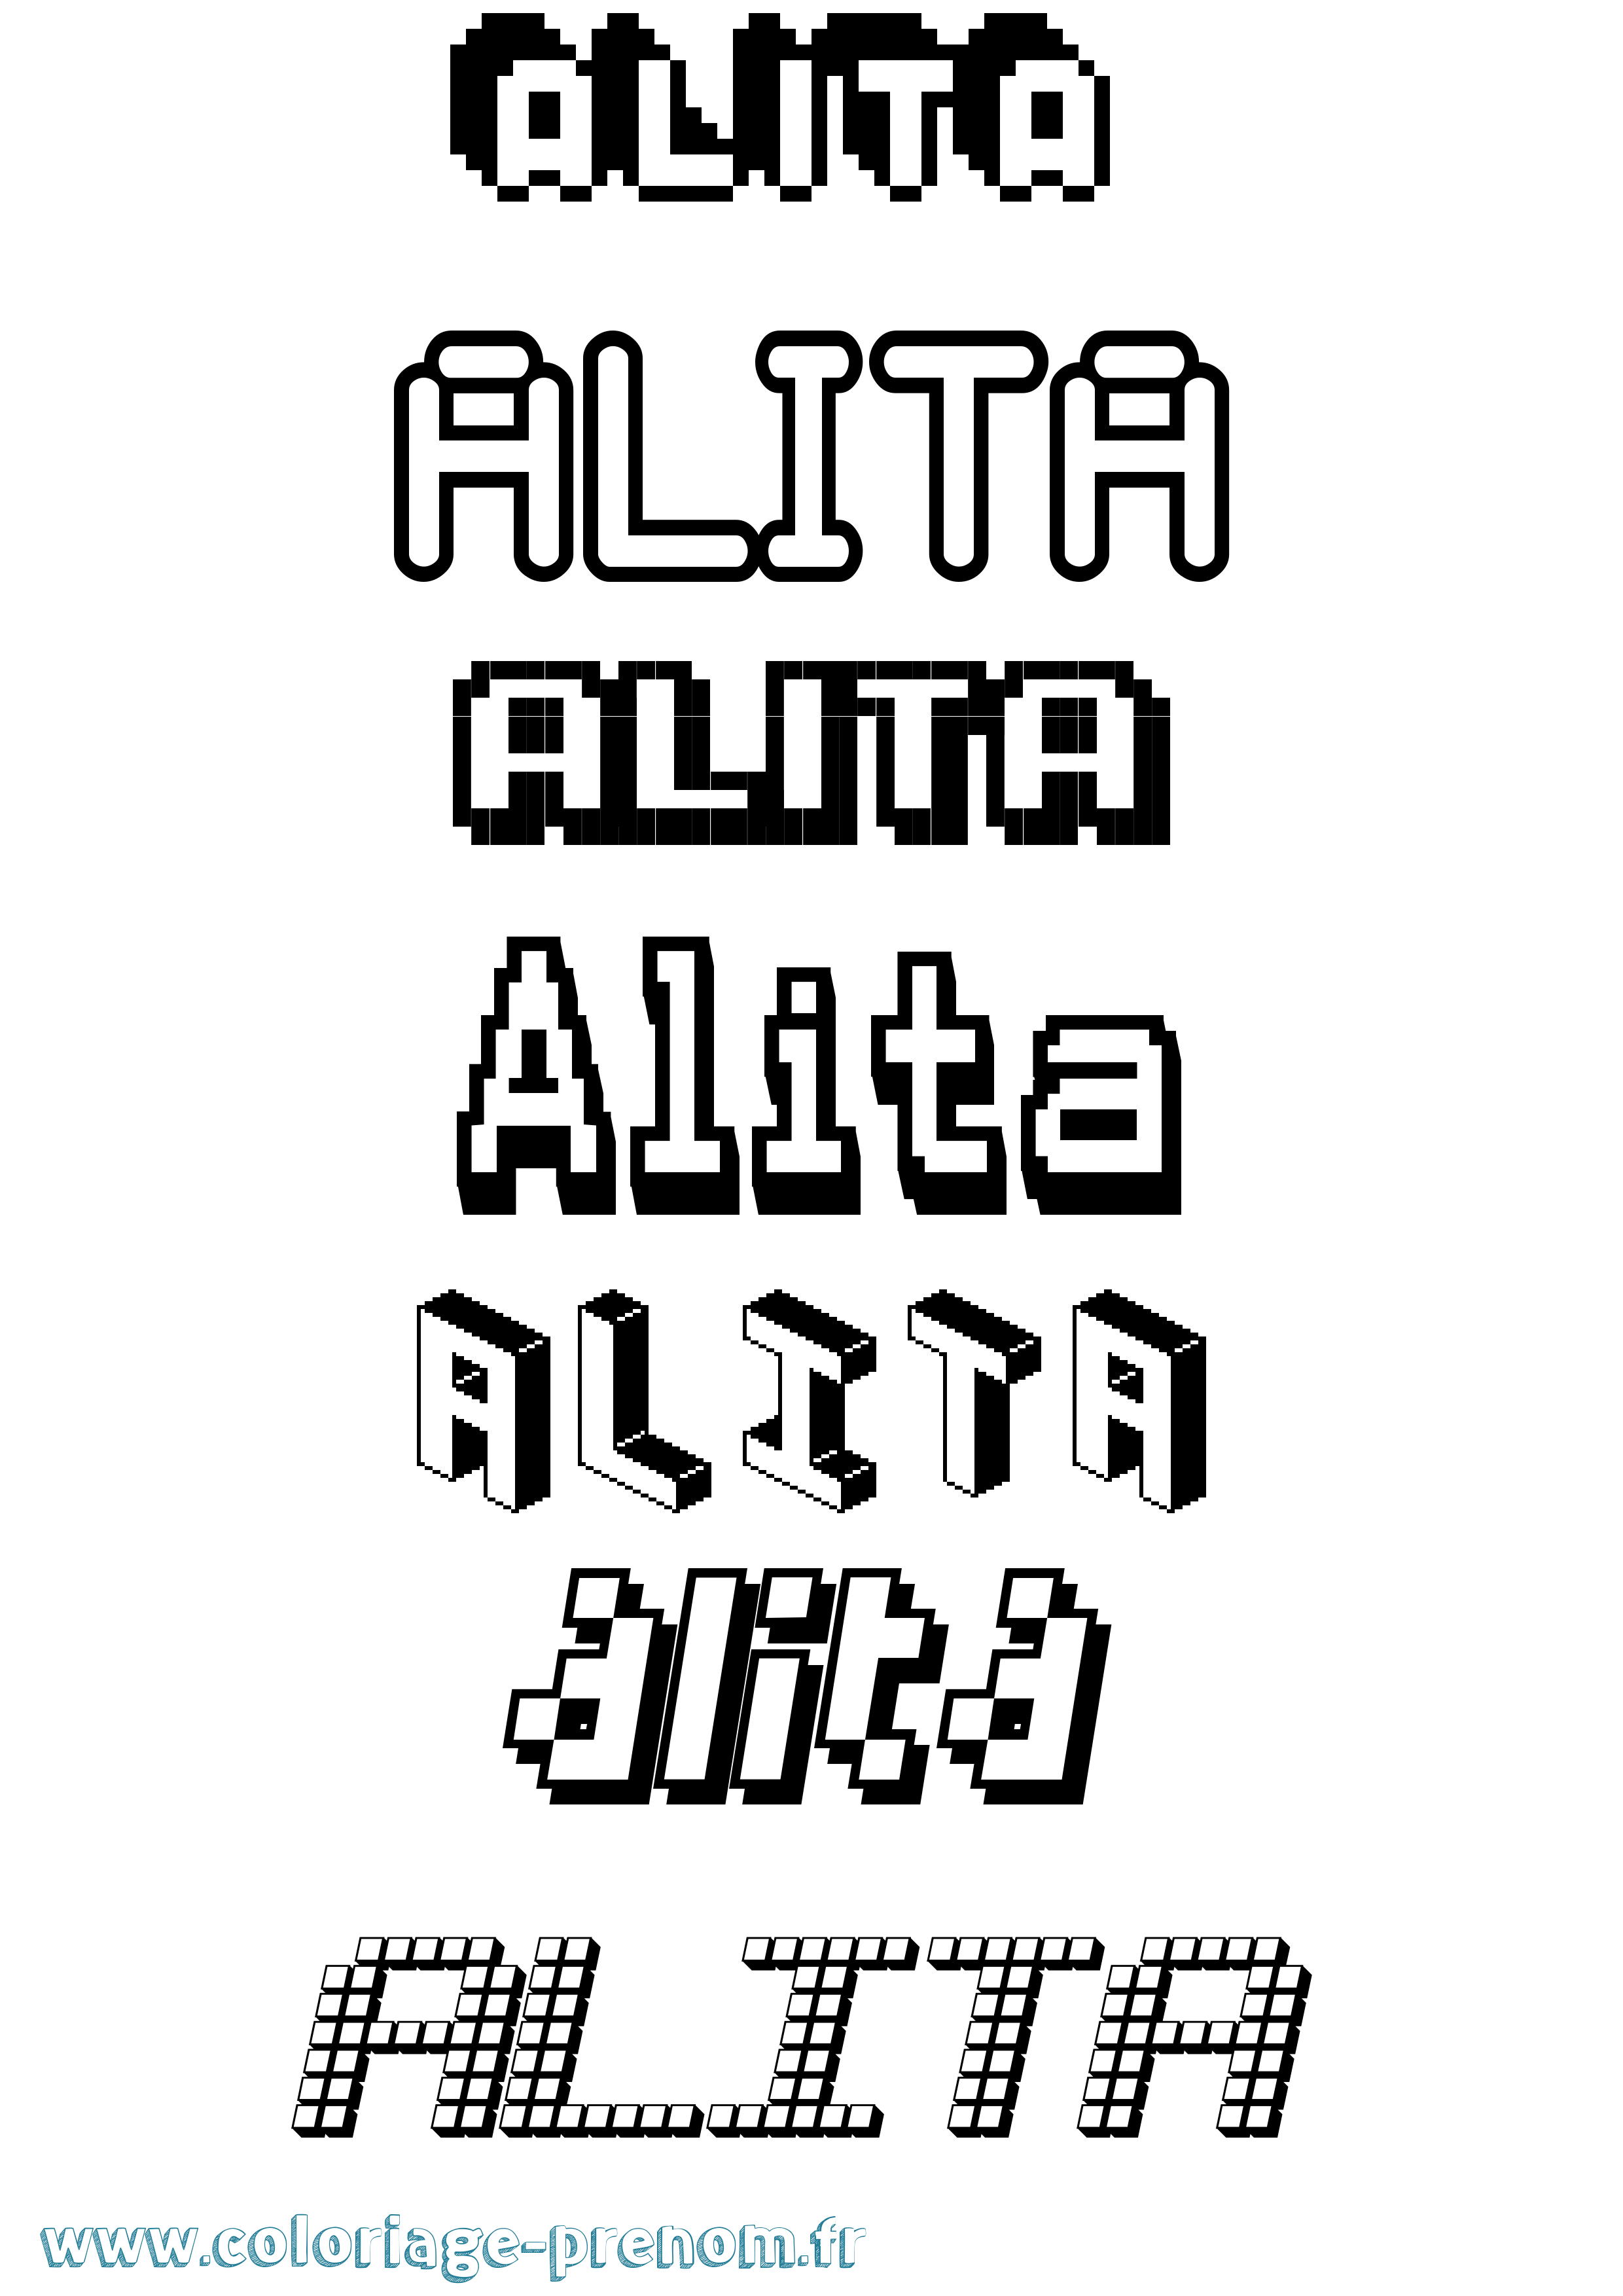 Coloriage prénom Alita Pixel